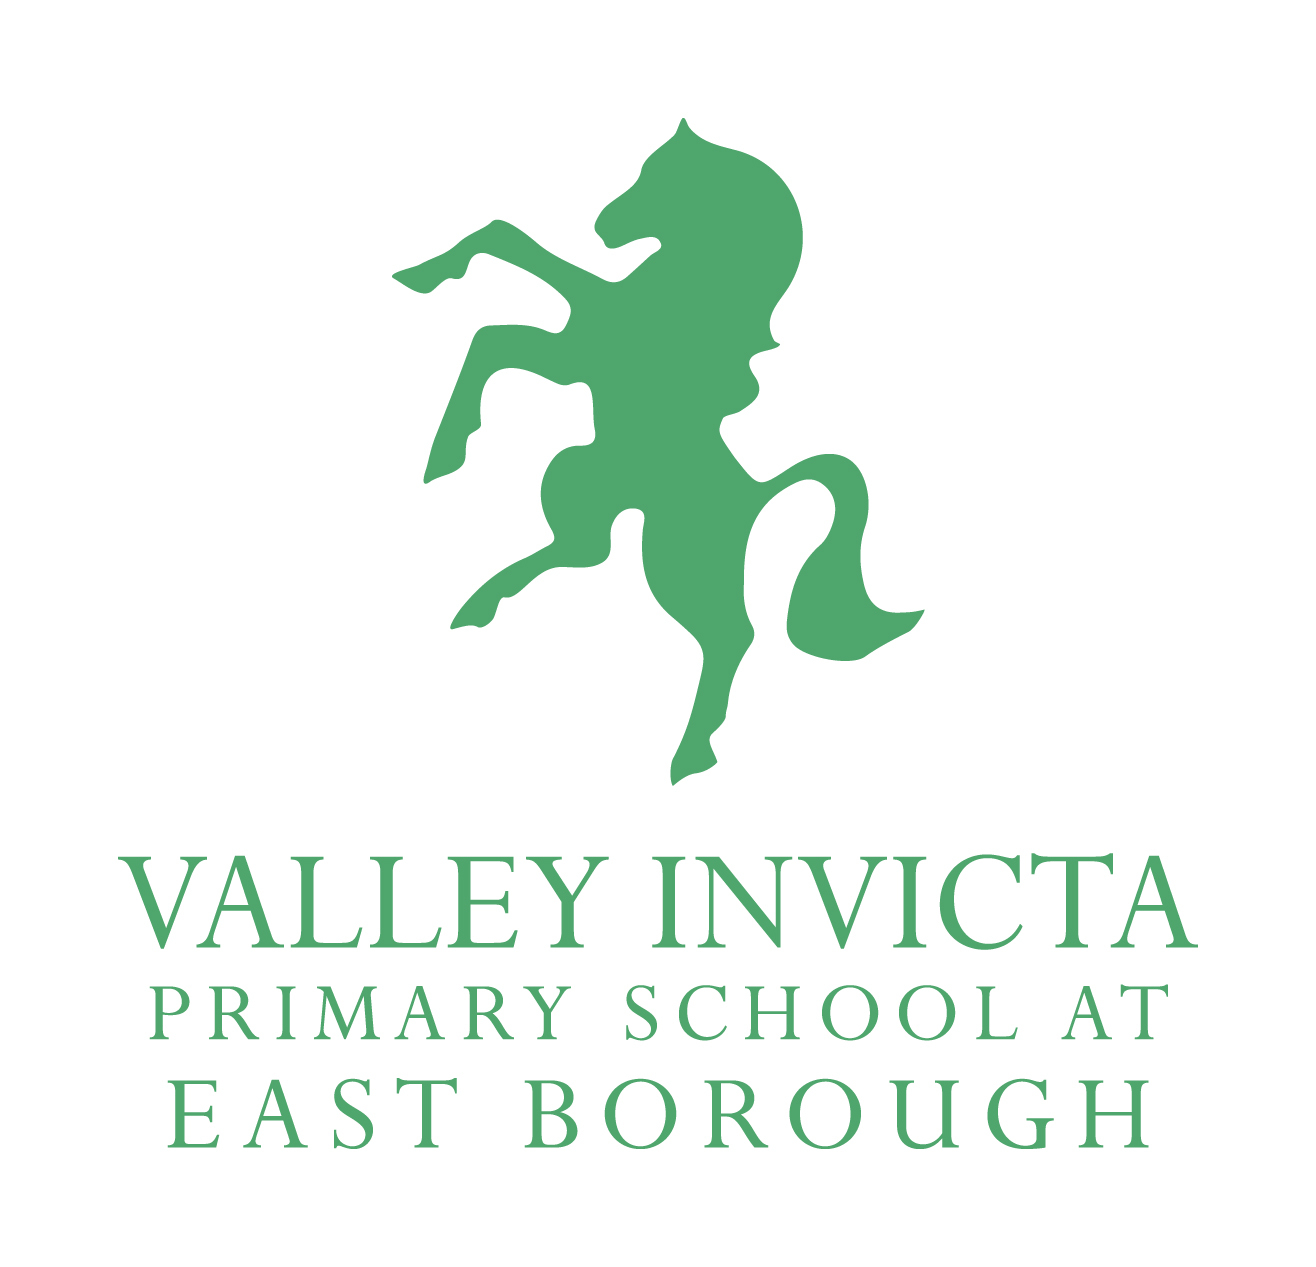 Valley Invicta Primary School at East Borough